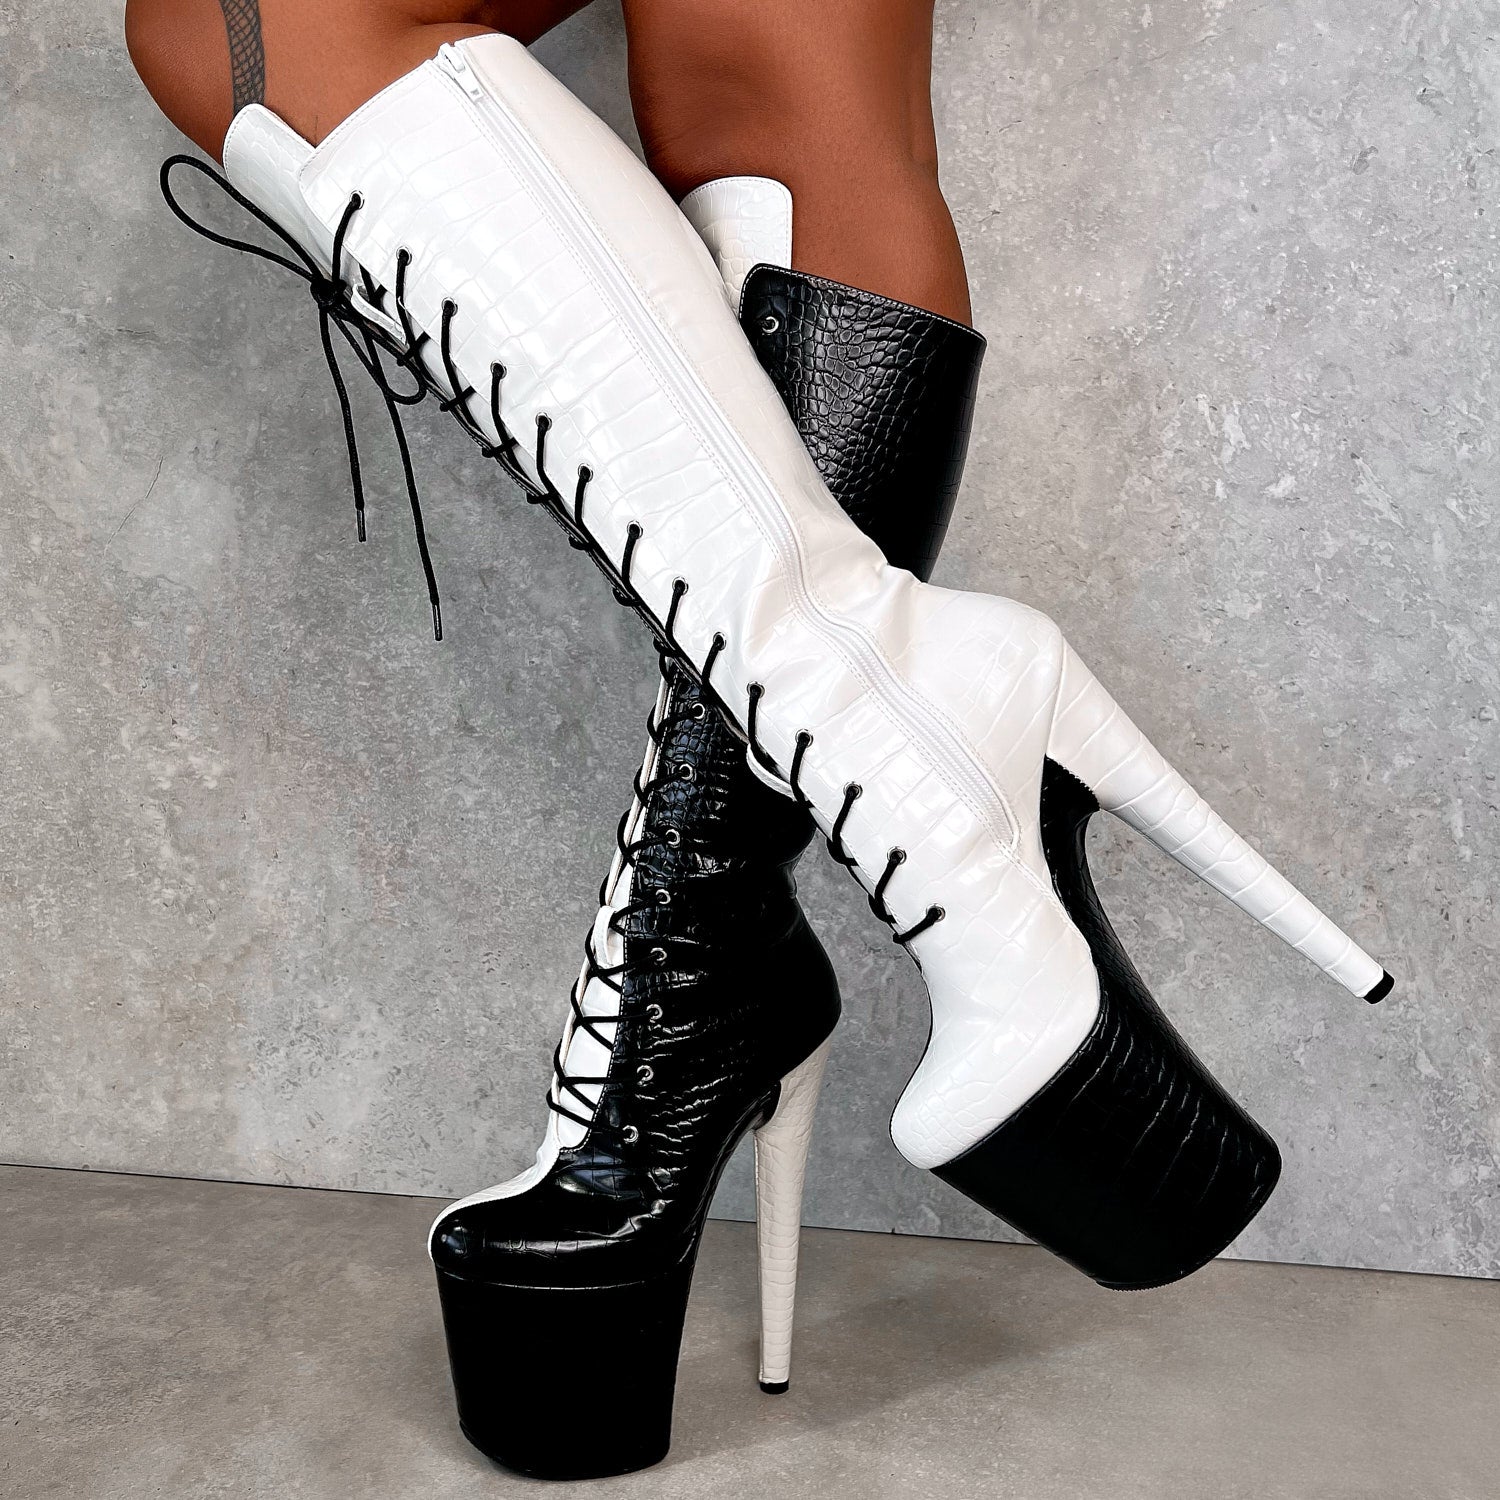 SNAPPED Black/White Knee Boot - 8INCH, stripper shoe, stripper heel, pole heel, not a pleaser, platform, dancer, pole dance, floor work